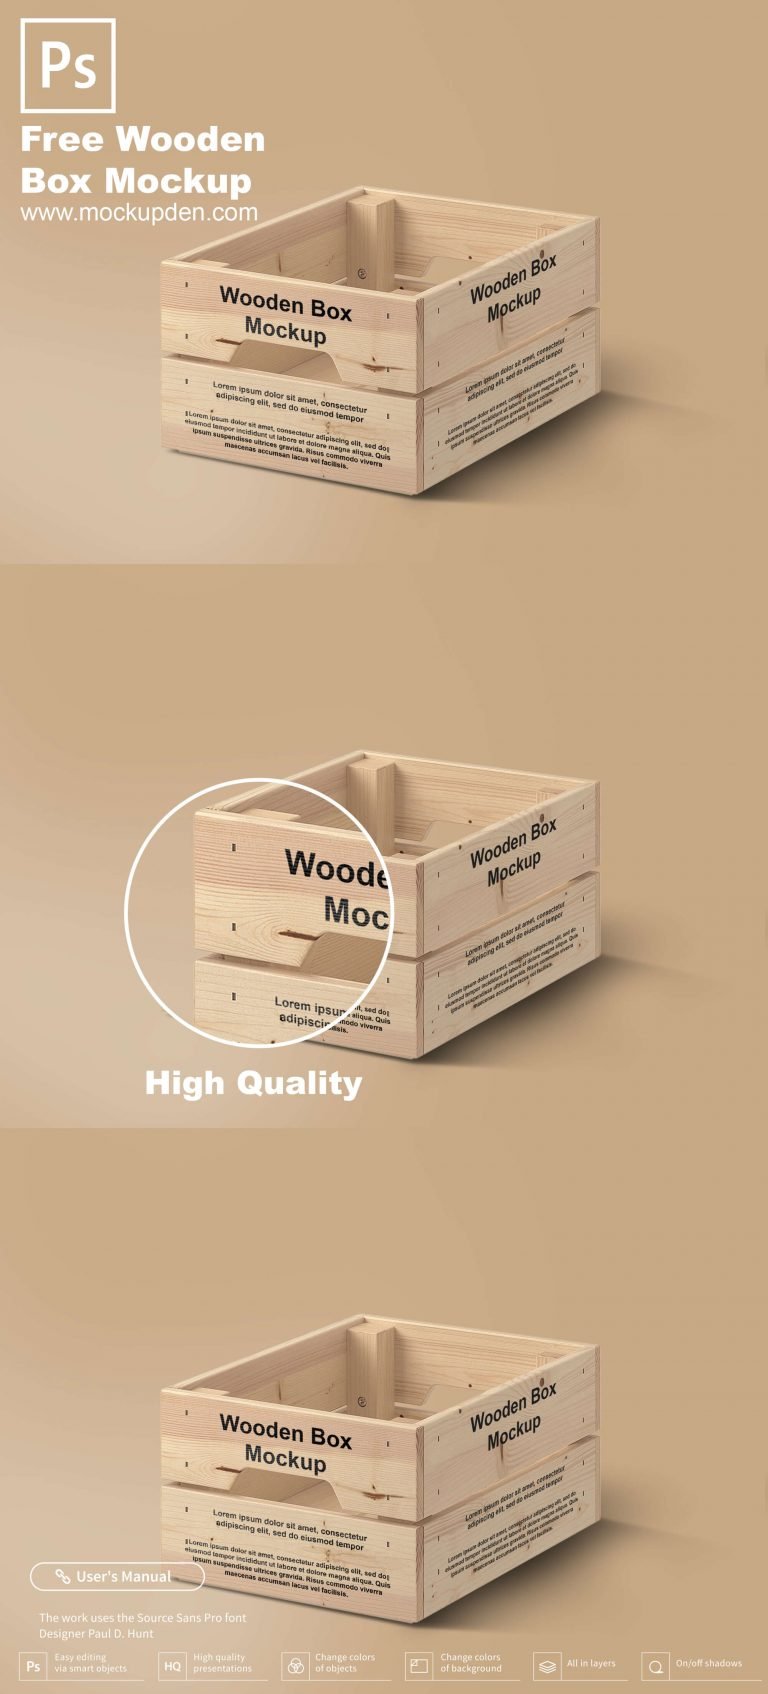 Download Free Wooden Box Mockup PSD Template | Mockup Den